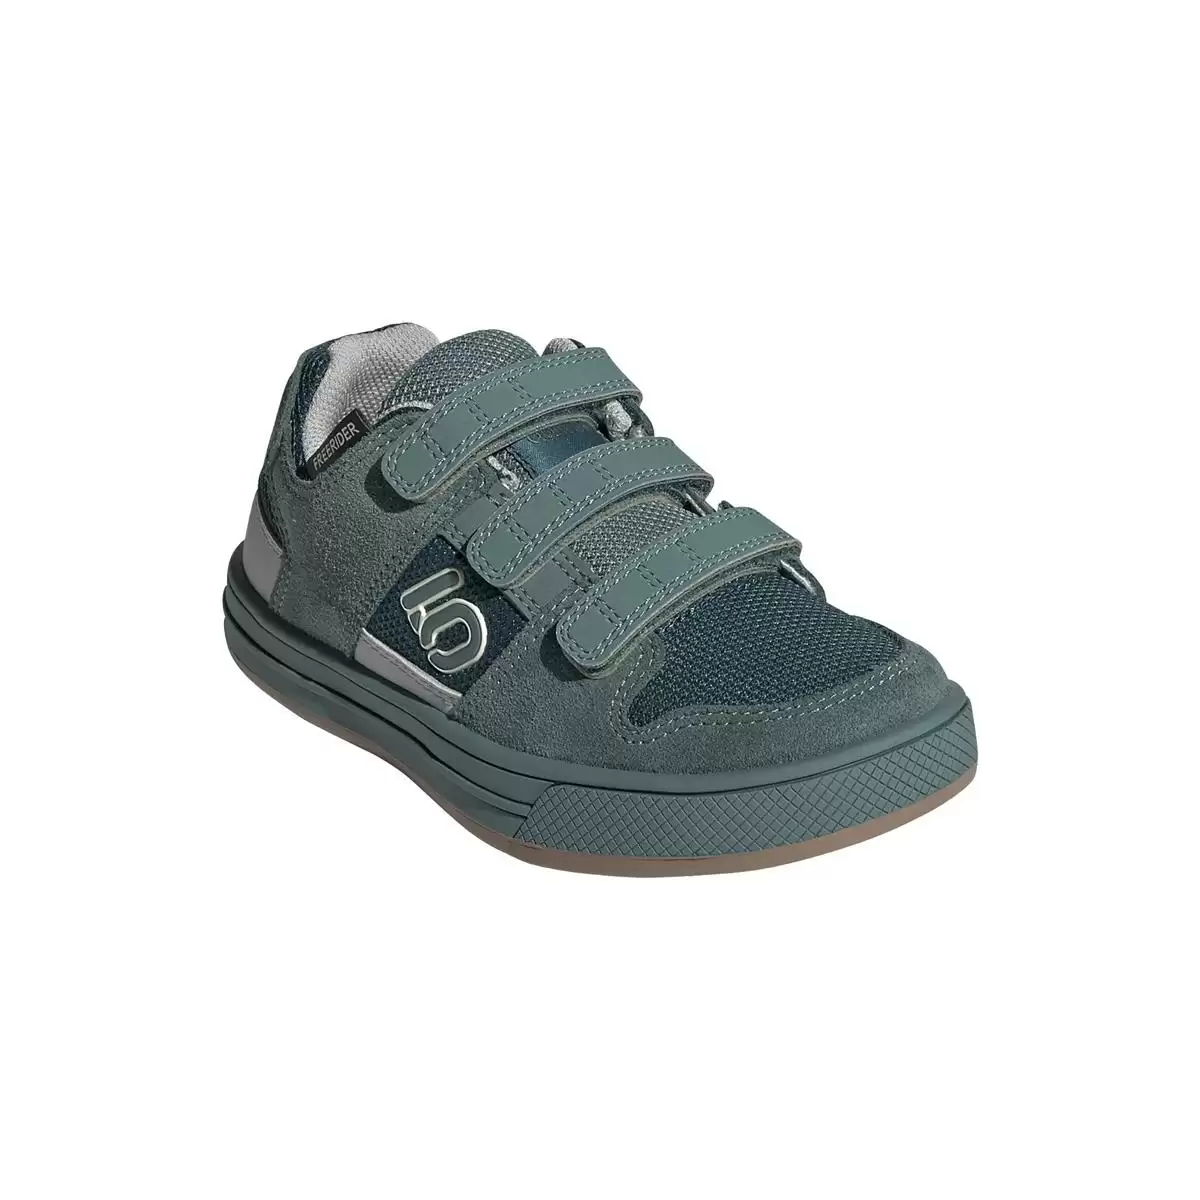 MTB Flat Shoes Freerider Kids VCS Junior Aqua Size 30 #1